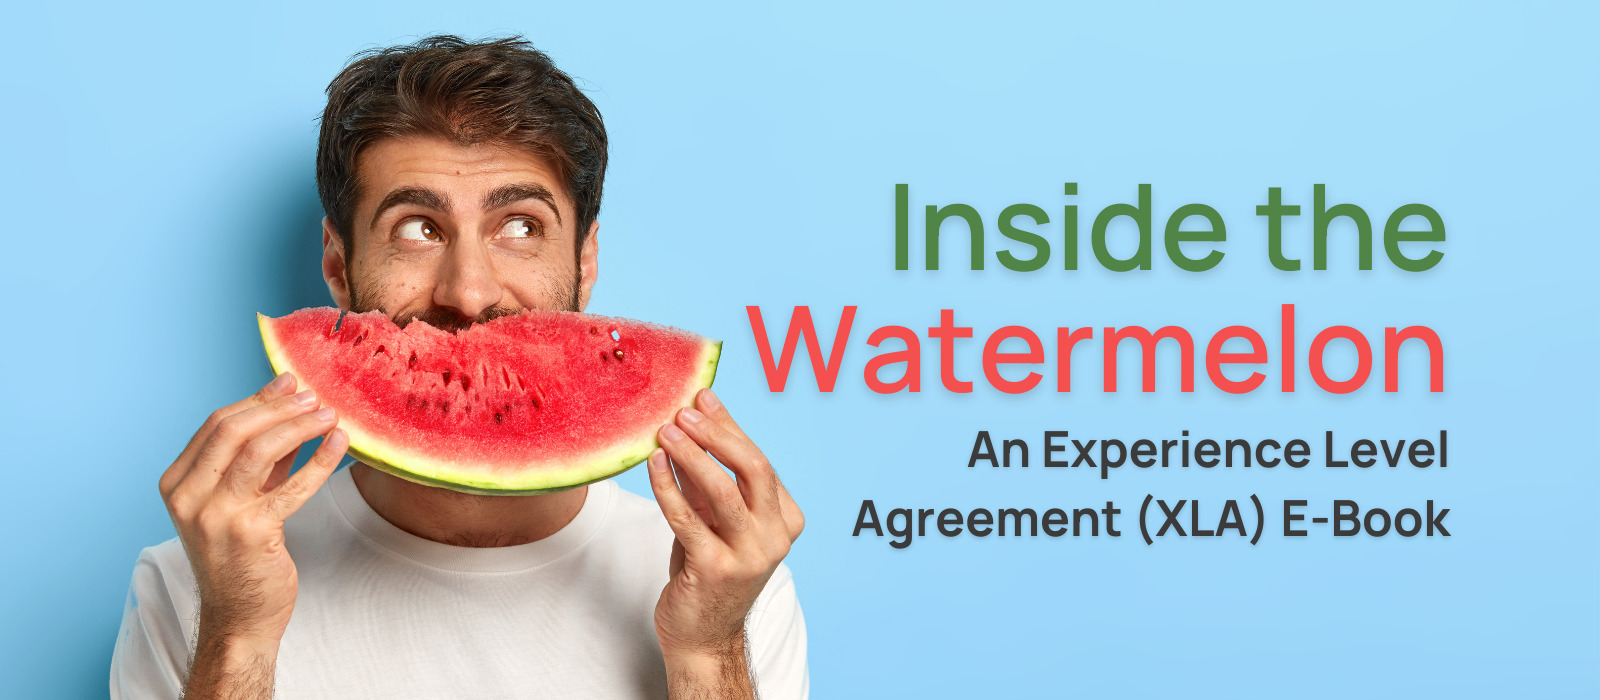 Graphic for the XLA e-book, Inside the Watermelon.